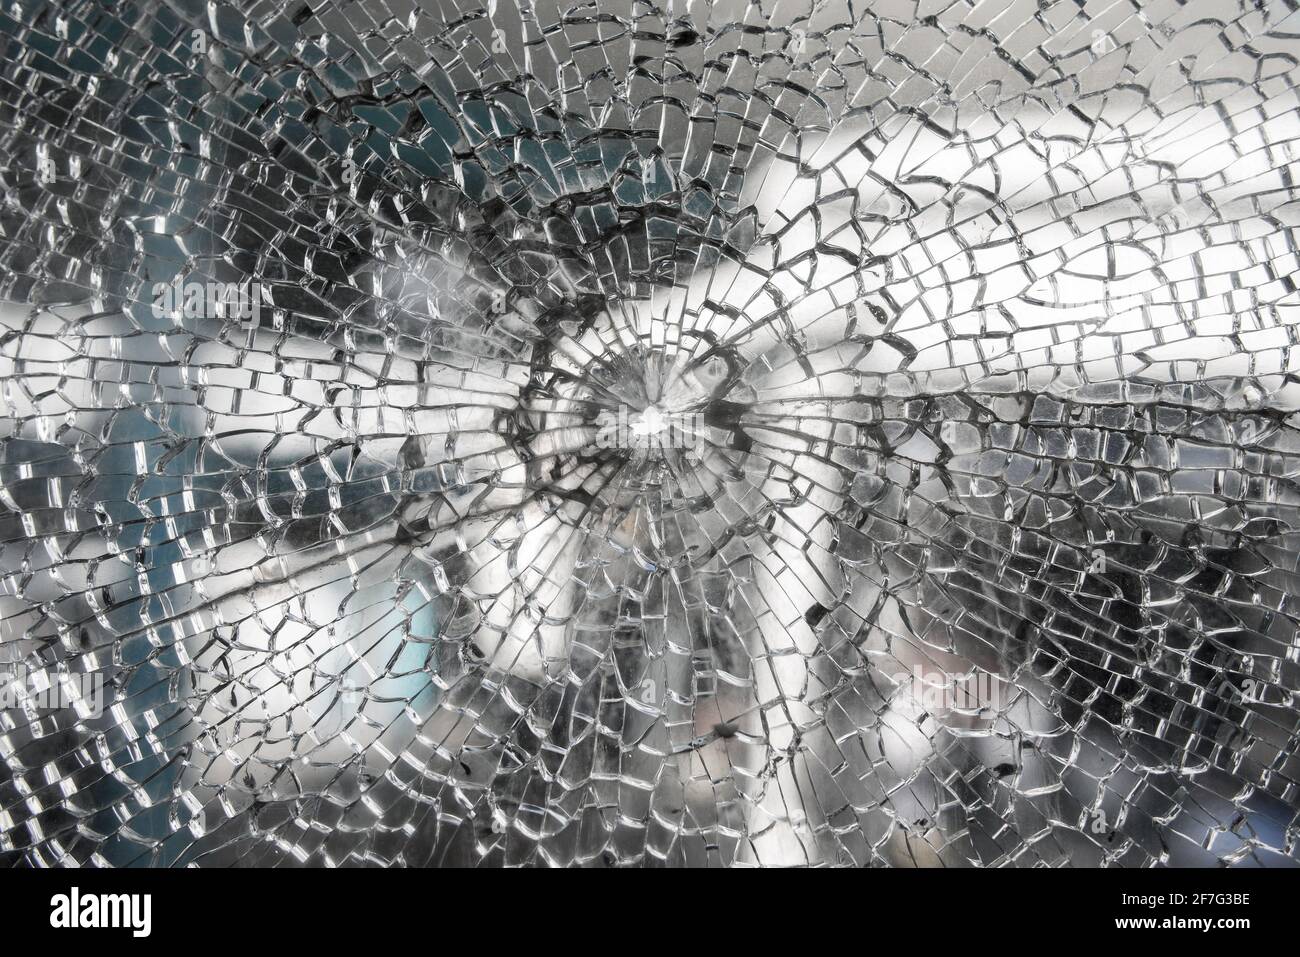 Cracked glass damaged window background with hole at center Stock Photo